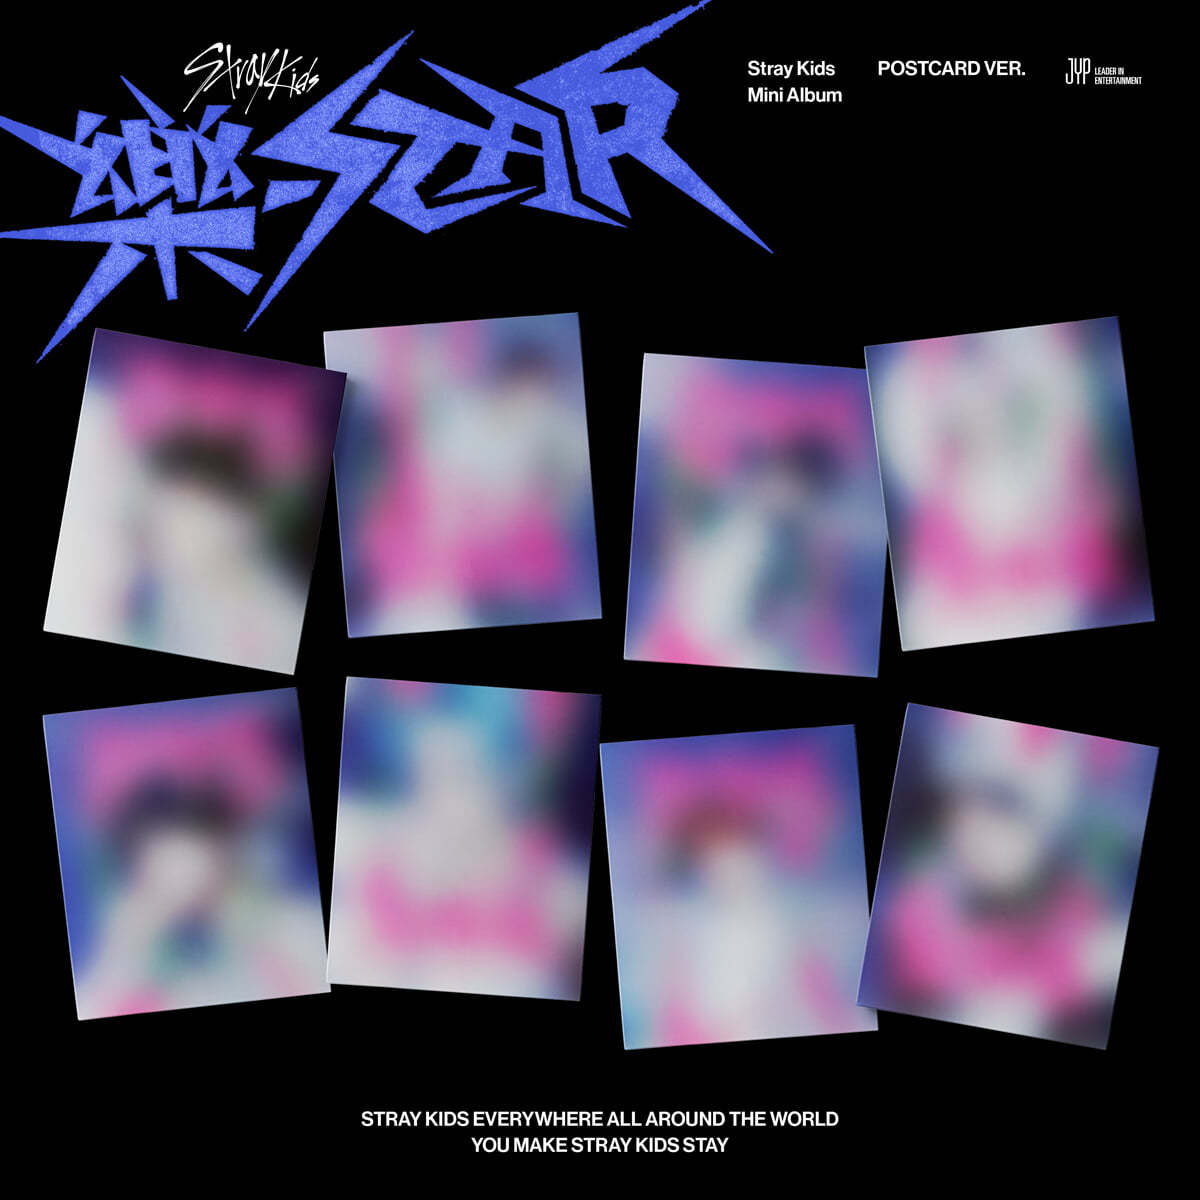 Stray Kids Mini Album - 樂-STAR (RockStar) ALBUM – Kpop Omo